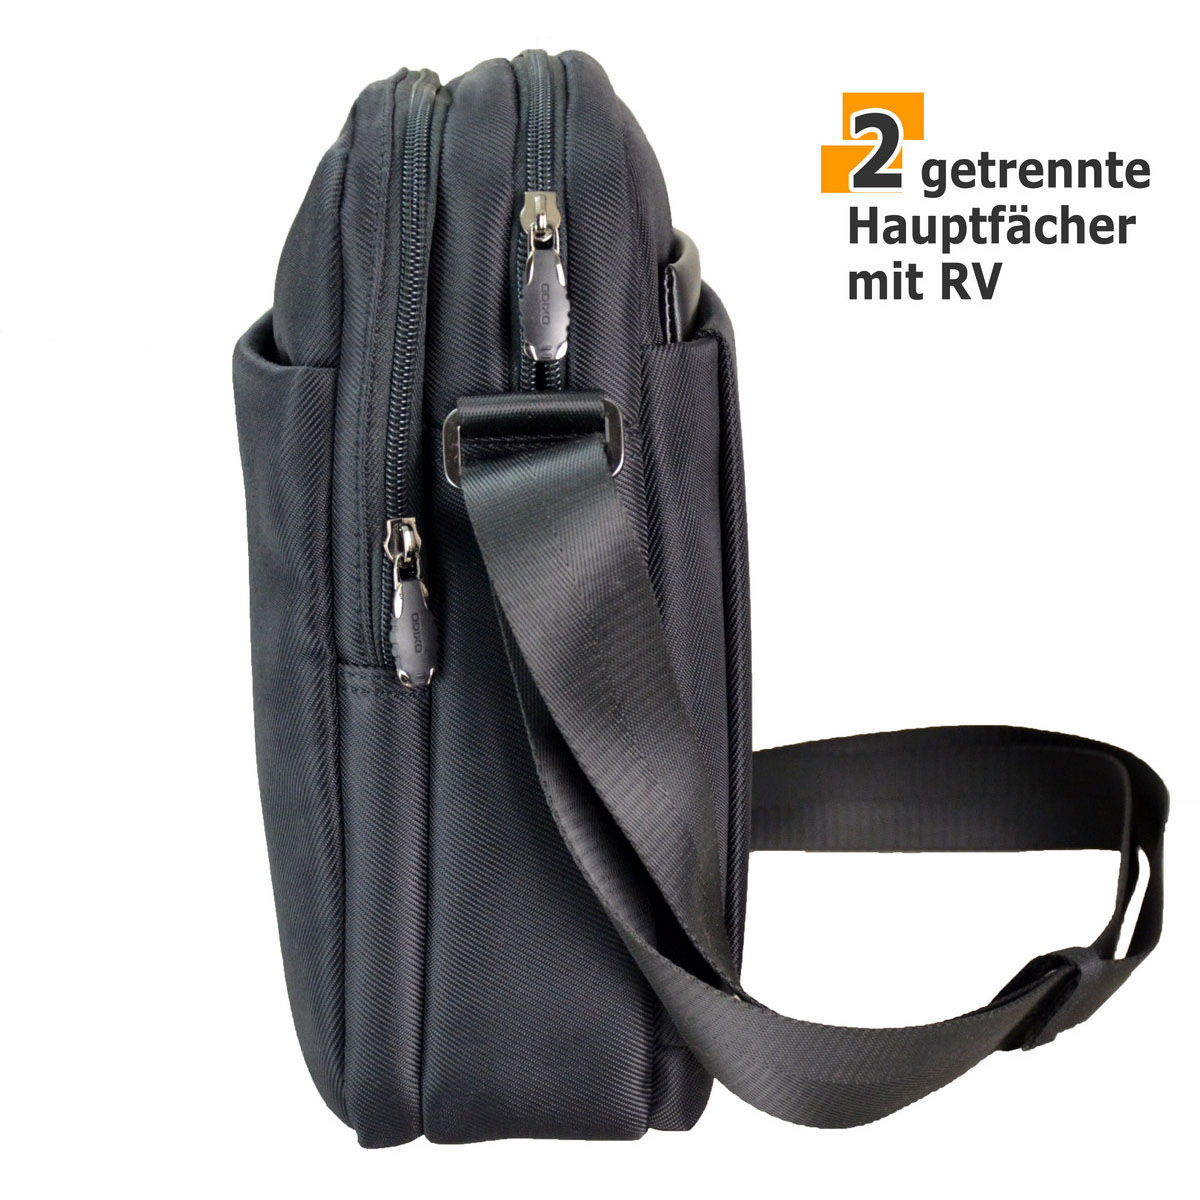 ODIXO Herren Umhängetasche Messenger Bag Schwarz B2169-1 Comfort Edition